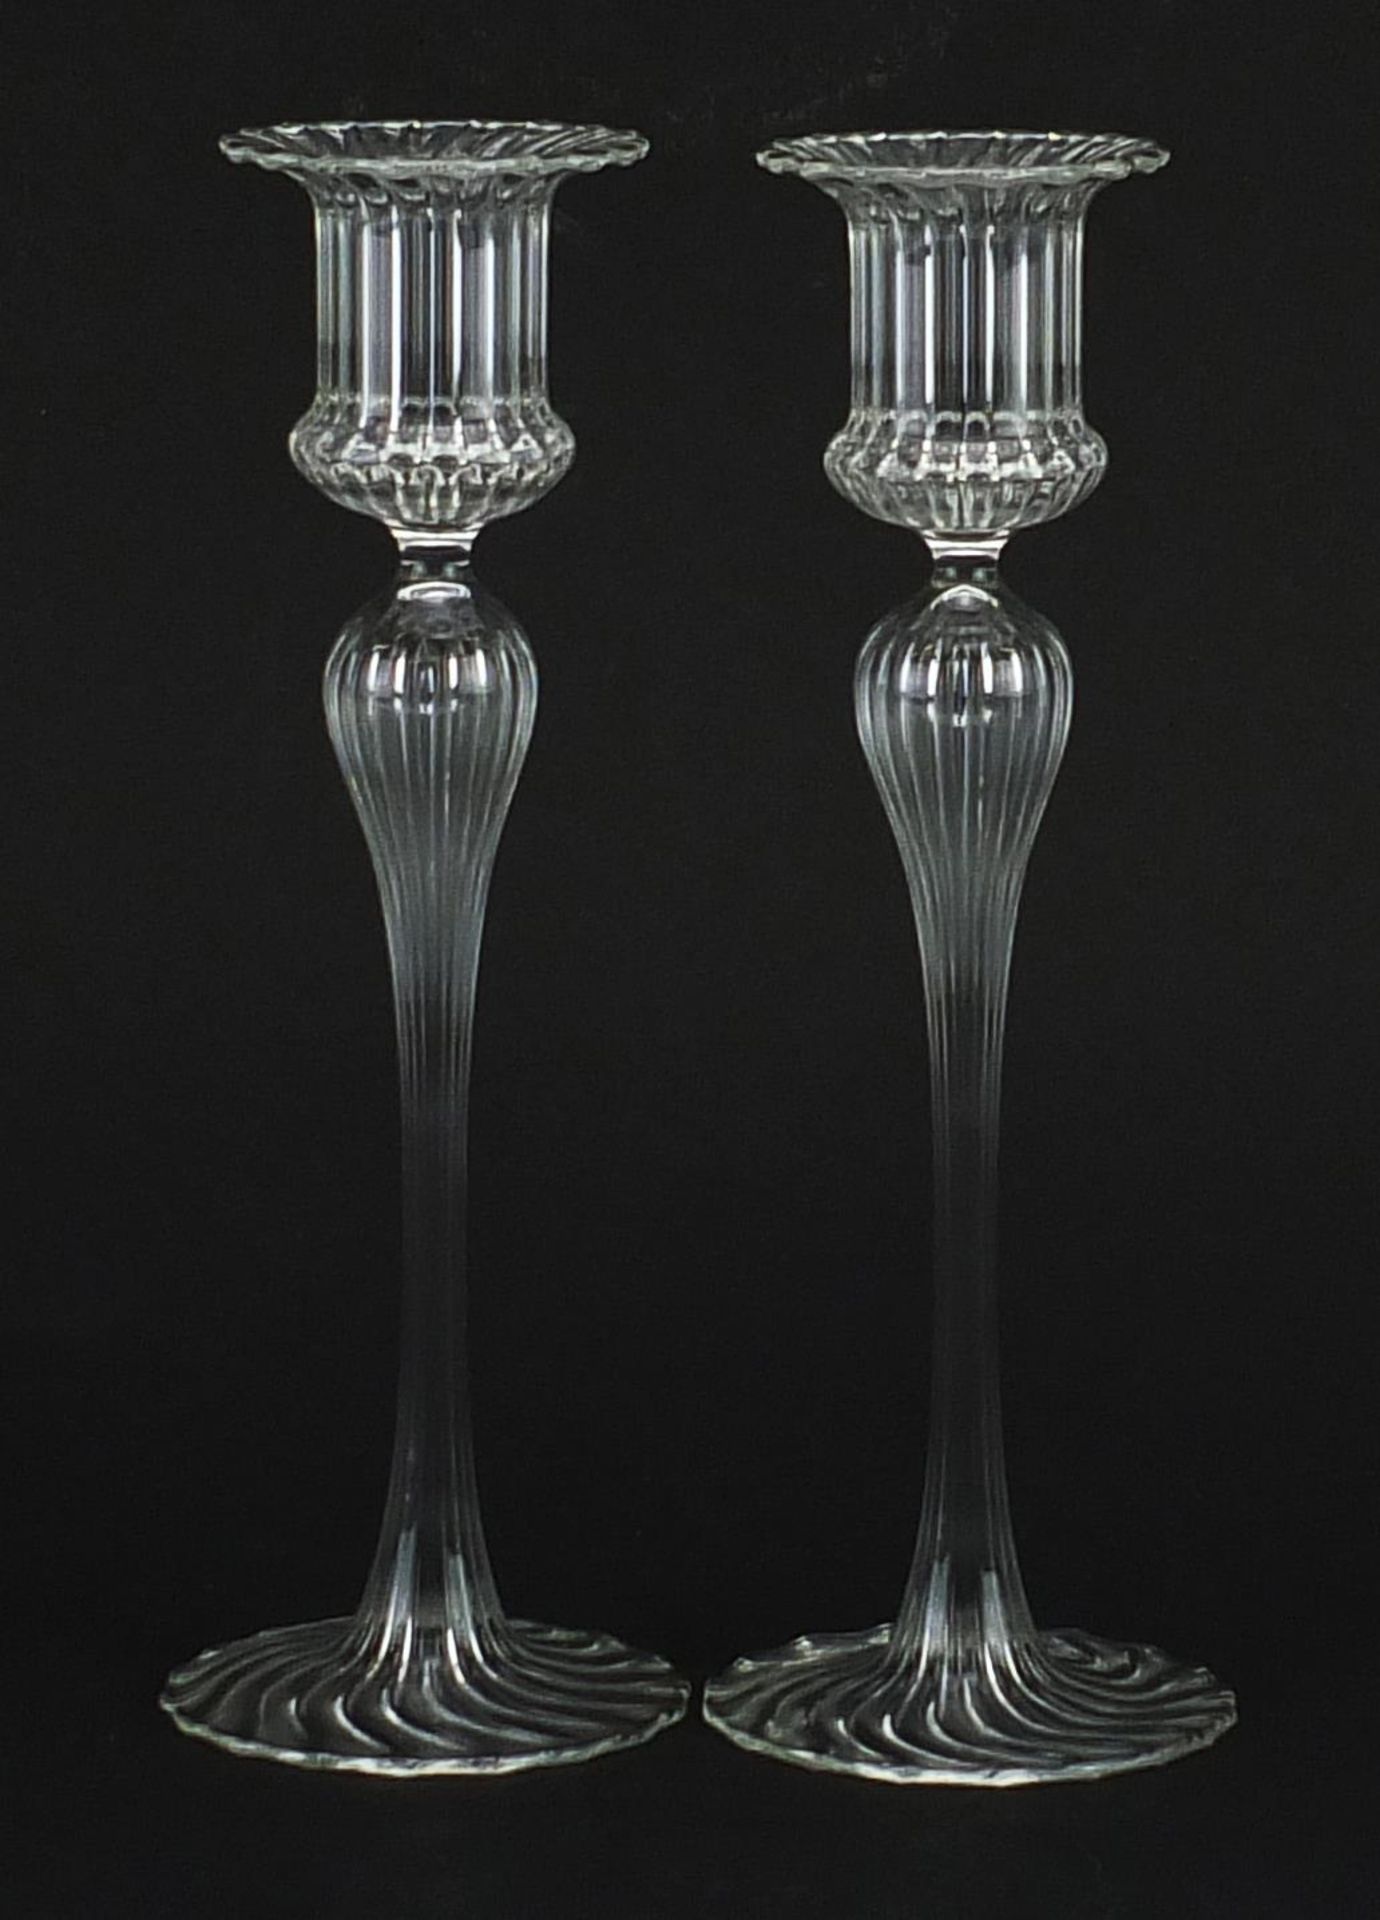 Pair of Venetian glass candlesticks, each 21cm high - Image 2 of 3